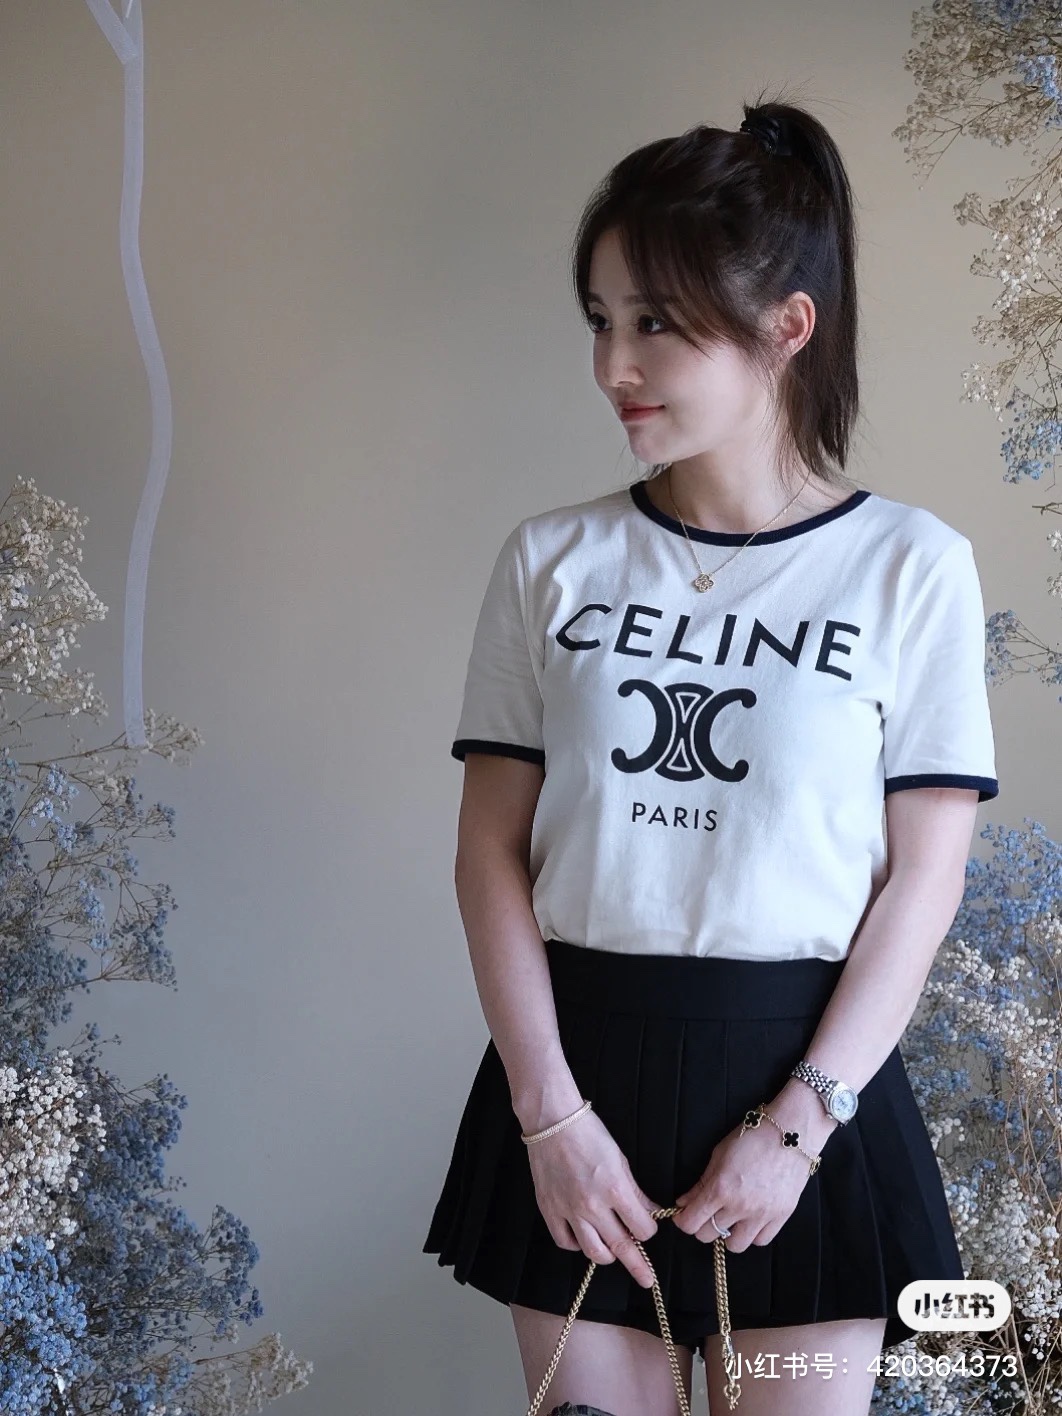 ❤️ 法国时尚品牌Celine，在潮流变迁中历久弥新，创立人薇琵娜女士把Celine从包袋到服饰，都在时尚圈占据了一席之地。\n\nCeline在不断的探索中前进，设计出很多的经典图案让人铭记于心，24新款女士T恤上的Chain Blason (双C锁链图案)便是其中之一，秦岚最新上身，简约合身的版型，领口和袖口带着镶边配色，唯美的复古感油然而生，整体效果还十分俏皮减龄，果然薇琵娜的Celine更懂女人，胸口标志性C????????????INE大字母非常显眼，下面便是凯旋门的双C锁链图案，搭配